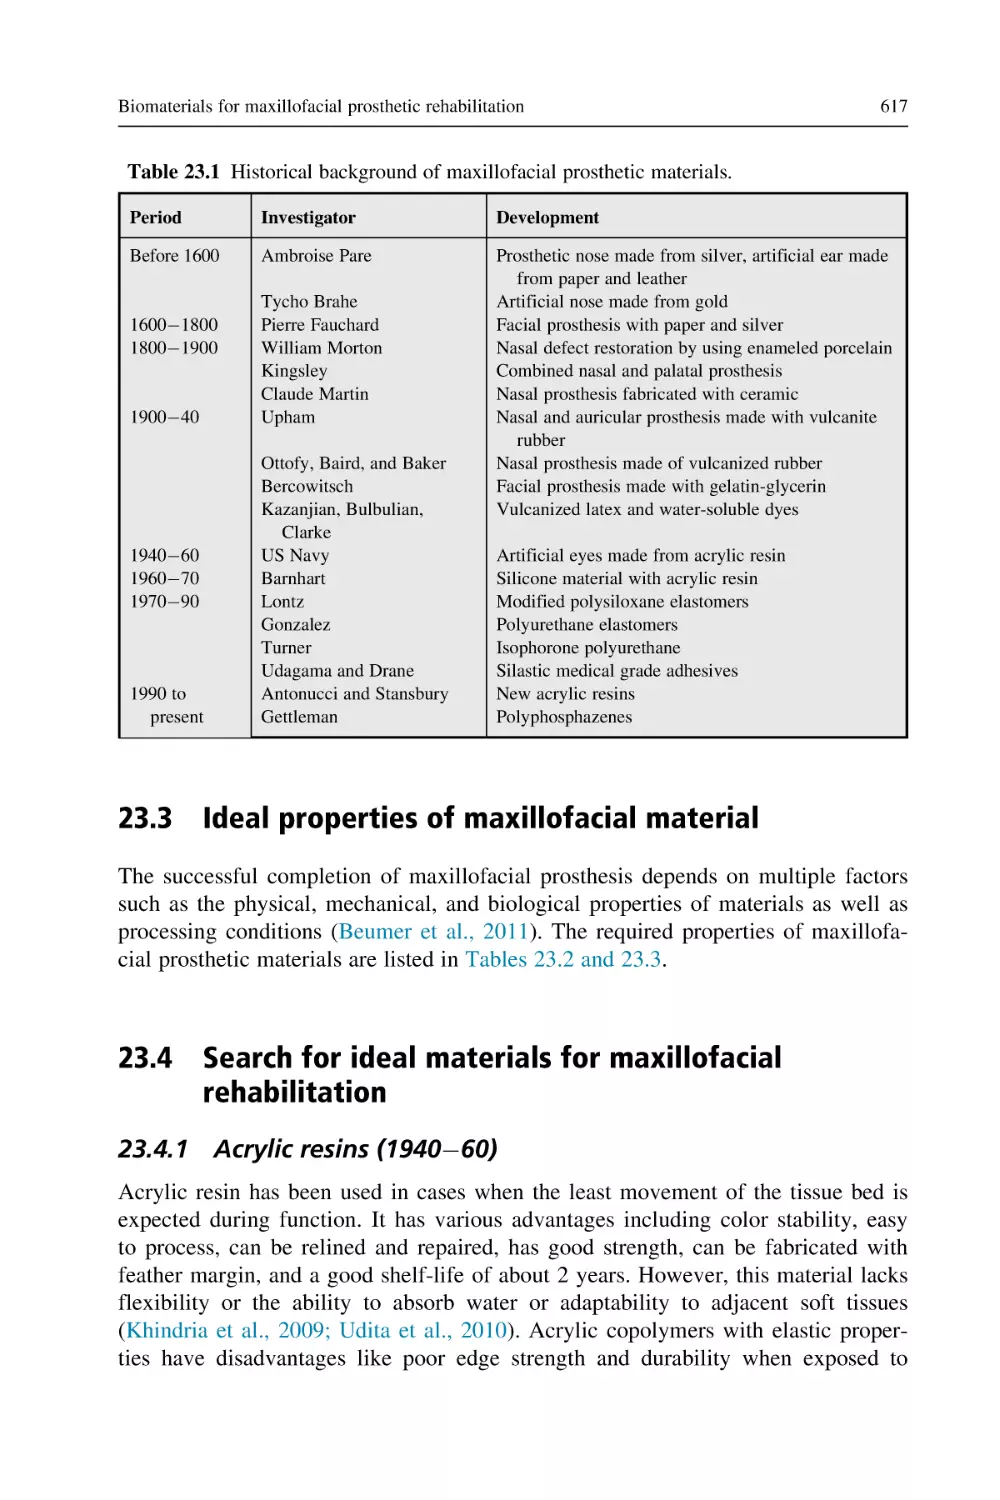 23.3 Ideal properties of maxillofacial material
23.4 Search for ideal materials for maxillofacial rehabilitation
23.4.1 Acrylic resins (1940–60)